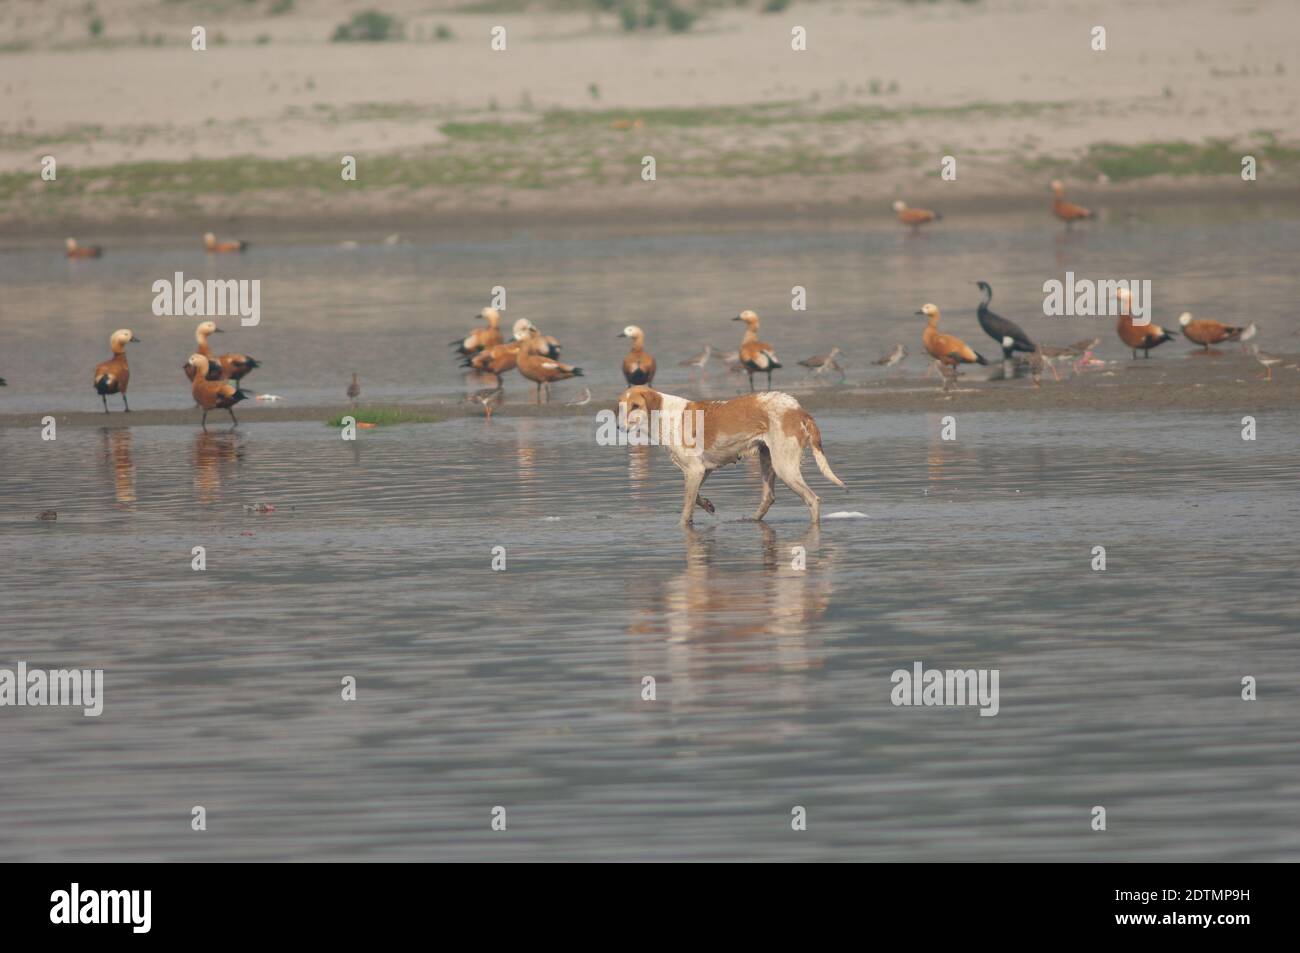 Cane feriale Canis familiaris e rifugi ruddy Tadorna ferruginea sullo sfondo. Fiume Yamuna. Agra. Utttar Pradesh. India. Foto Stock